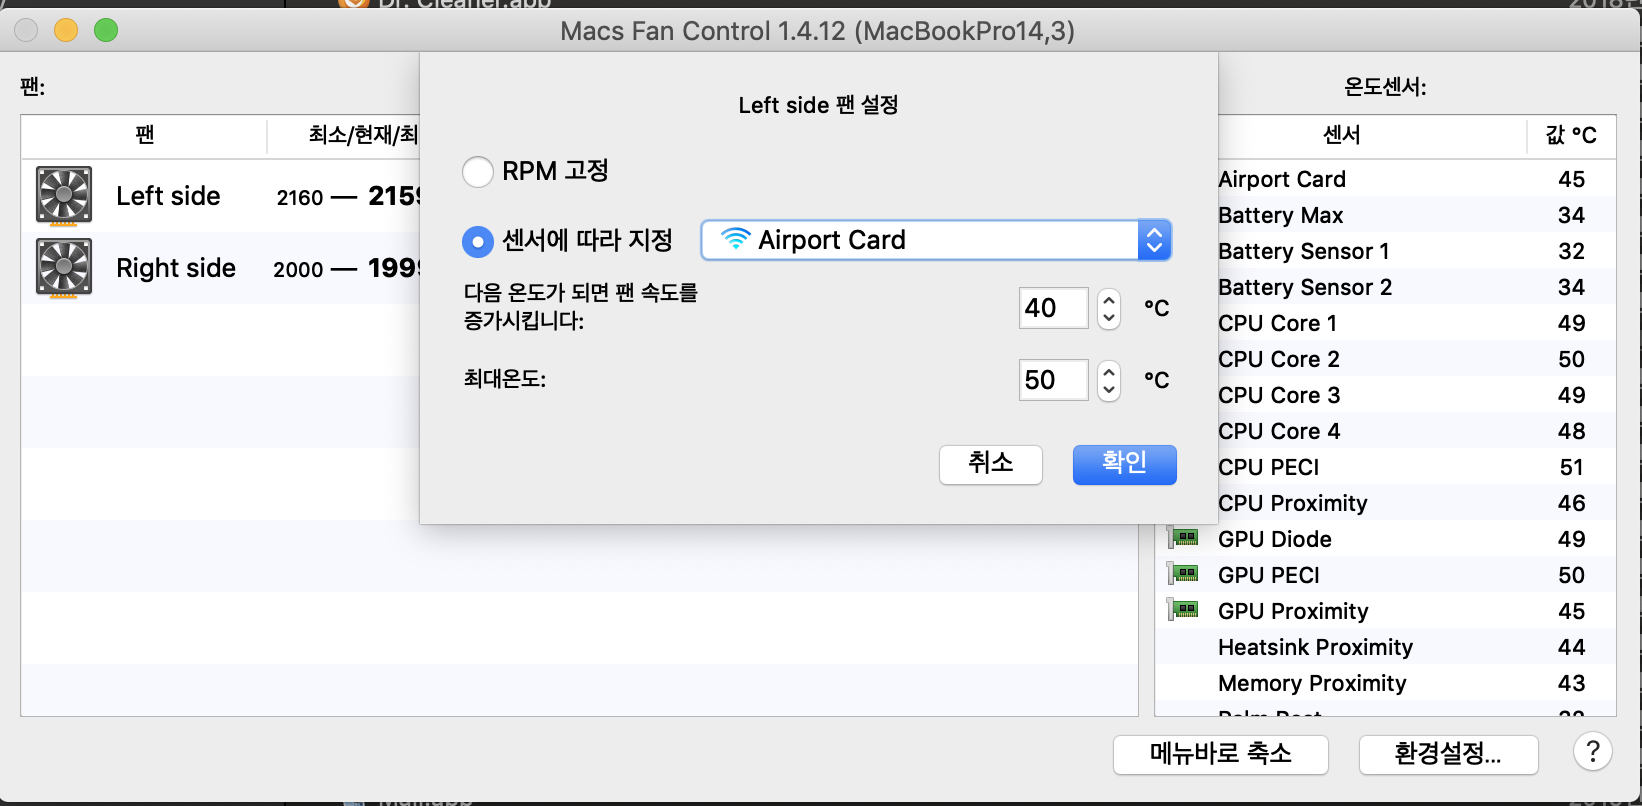 macs fan control work for imac